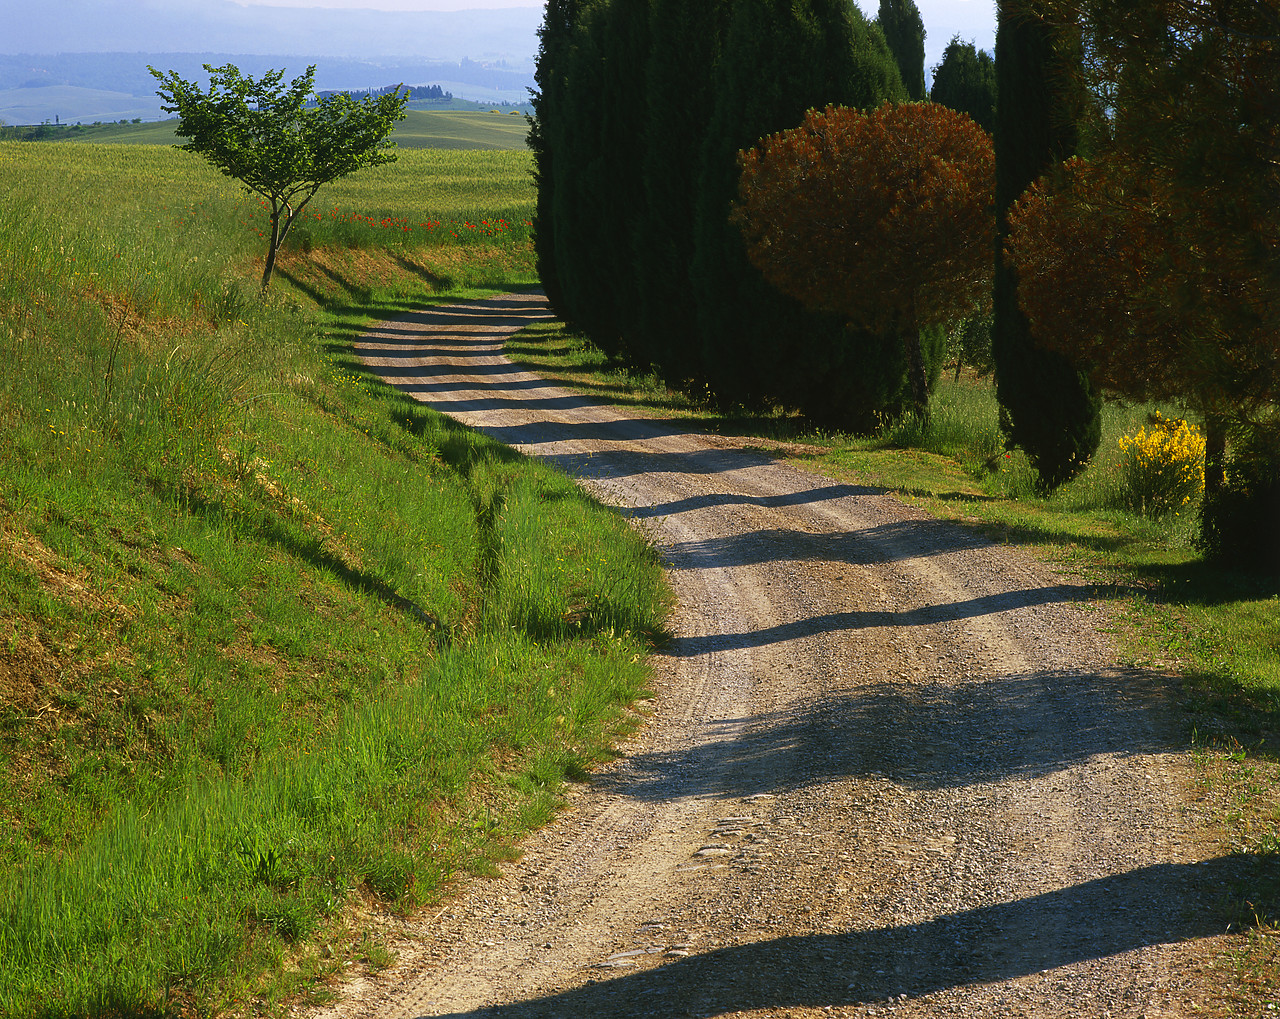 #020128-2 - Cypress Tree Shadows on Road, San Quirico, Tuscany, Italy